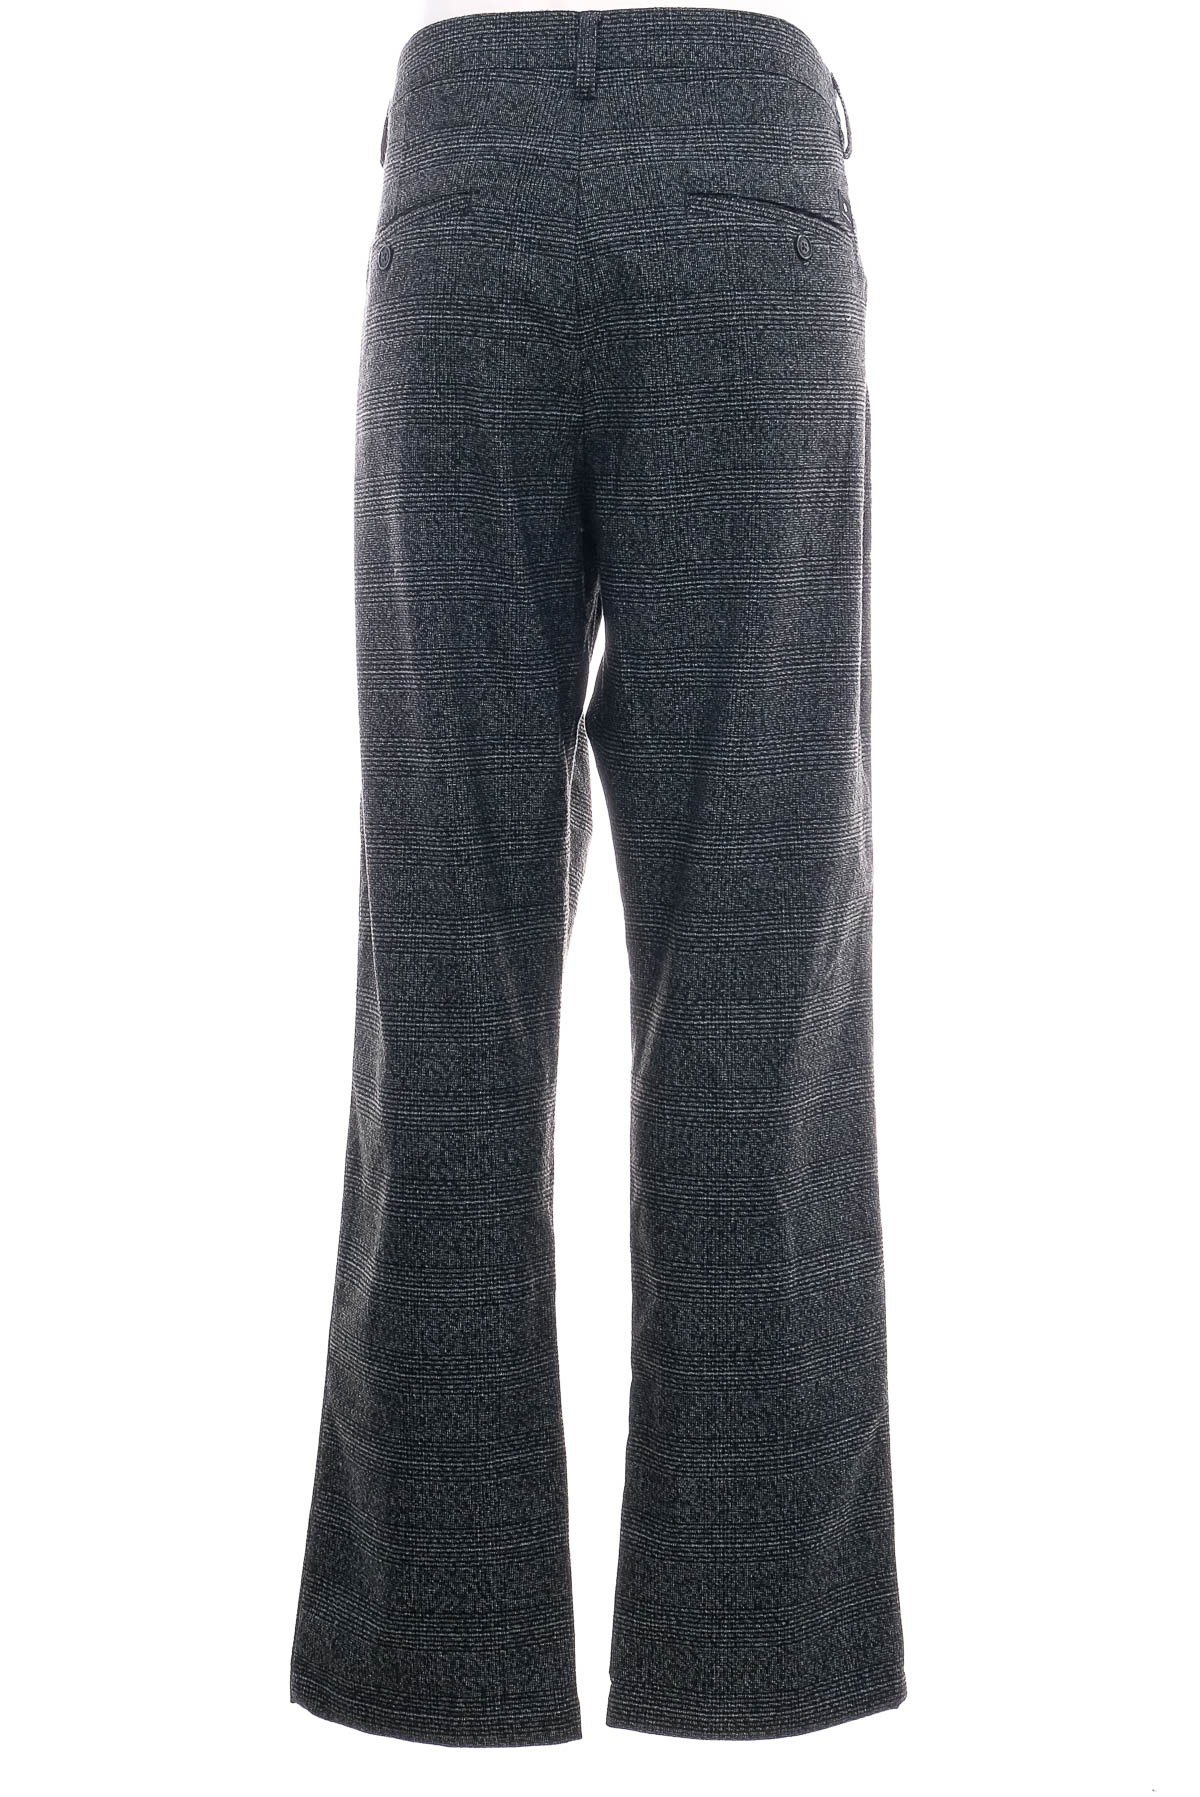 Men's trousers - QUARTERBACK by jbc - 1